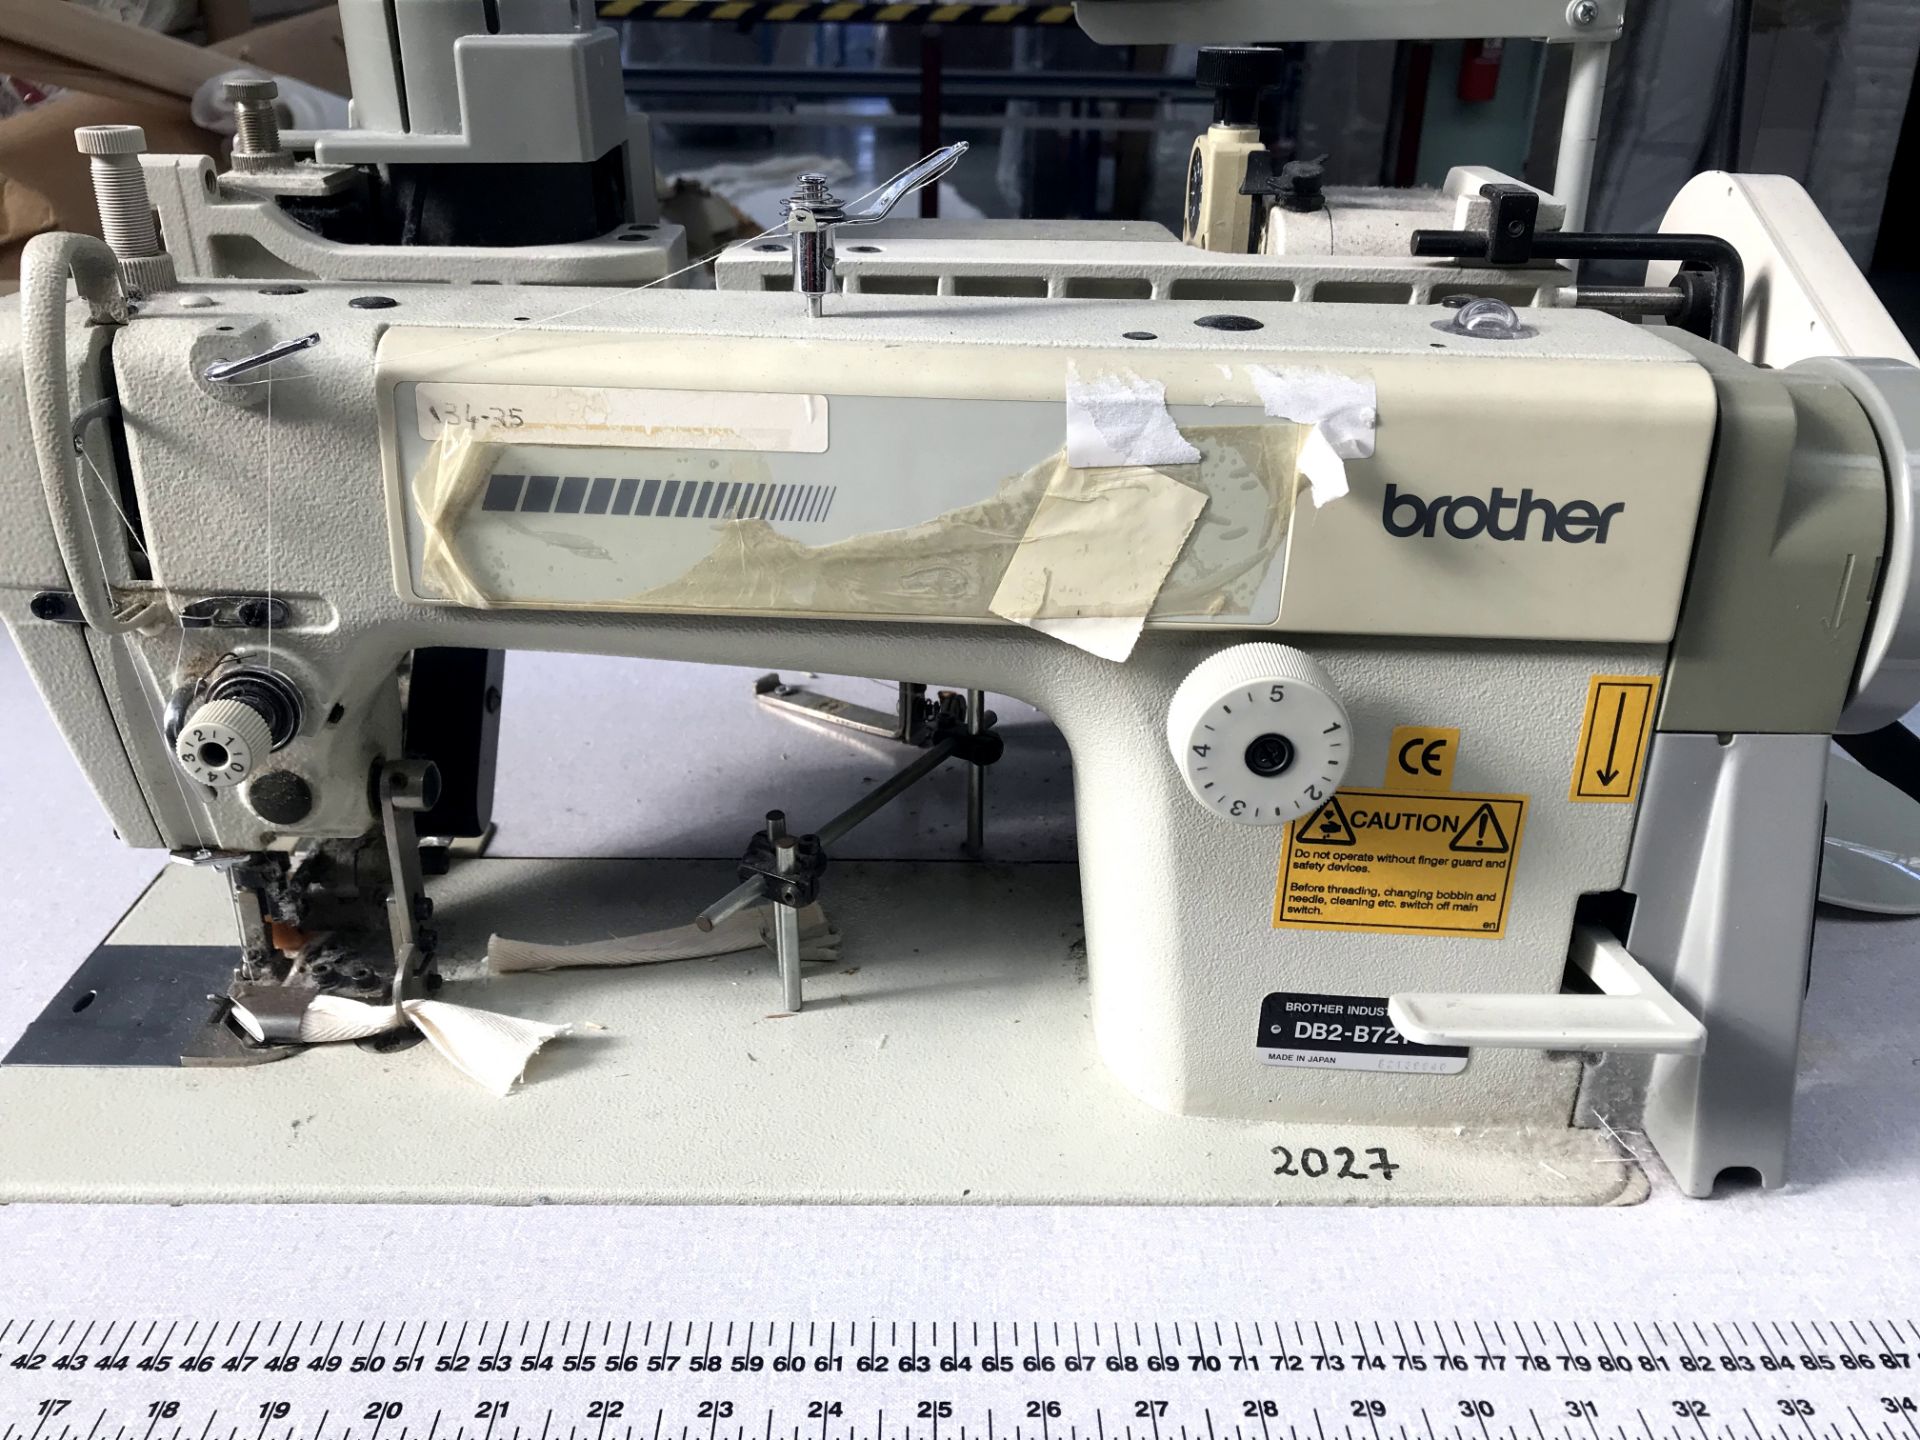 Brother DB2-B721-5 single needle lockstitch sewing machine